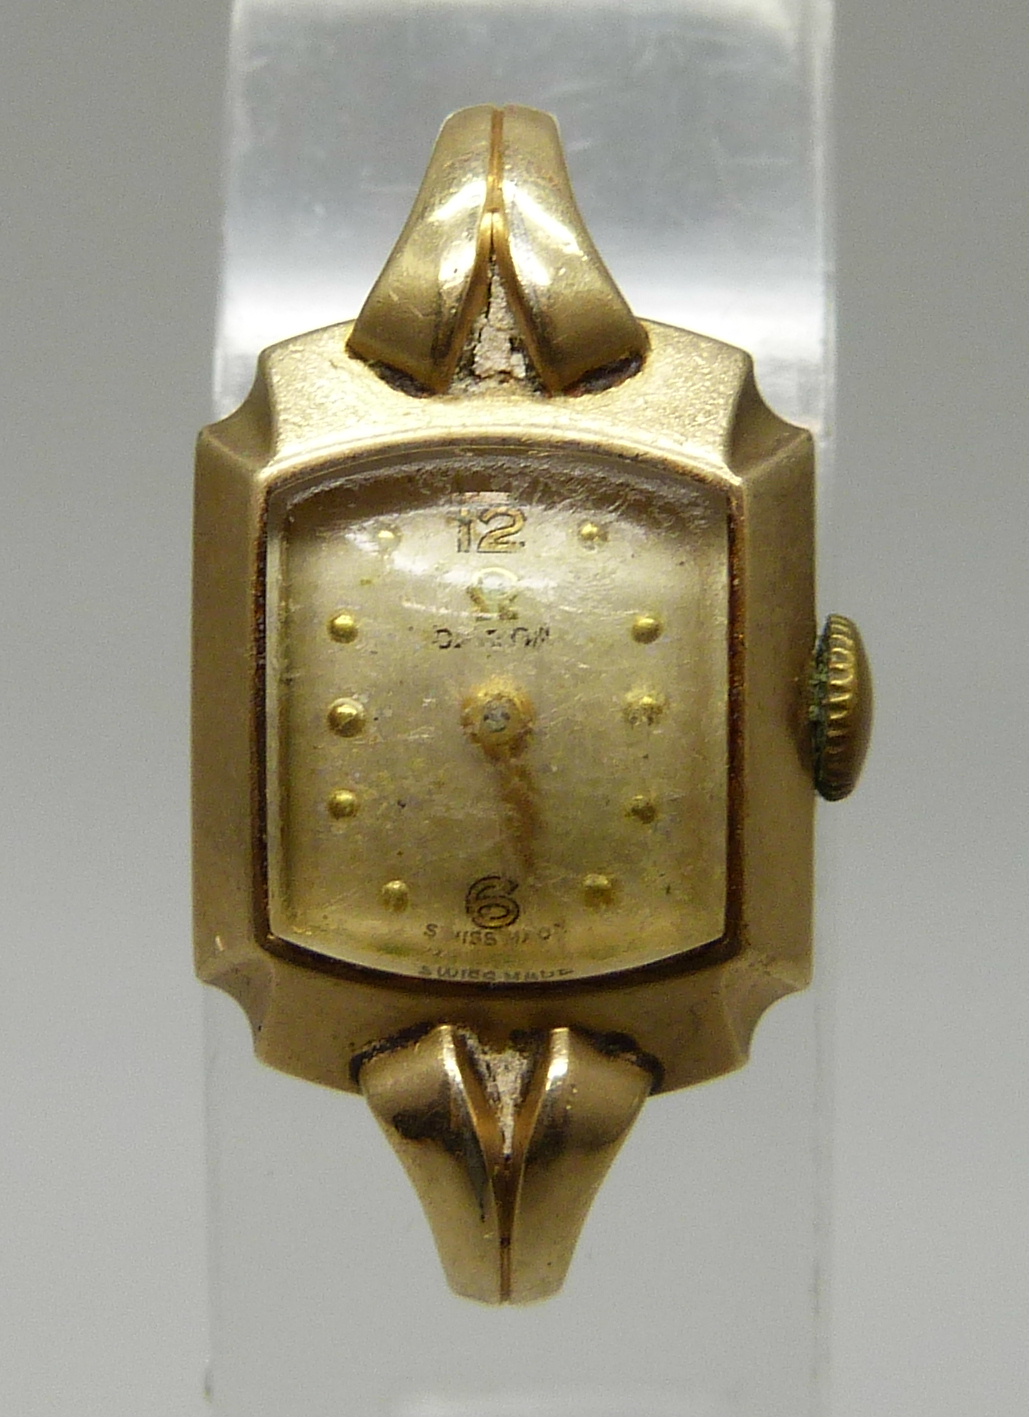 A lady's Omega wristwatch head